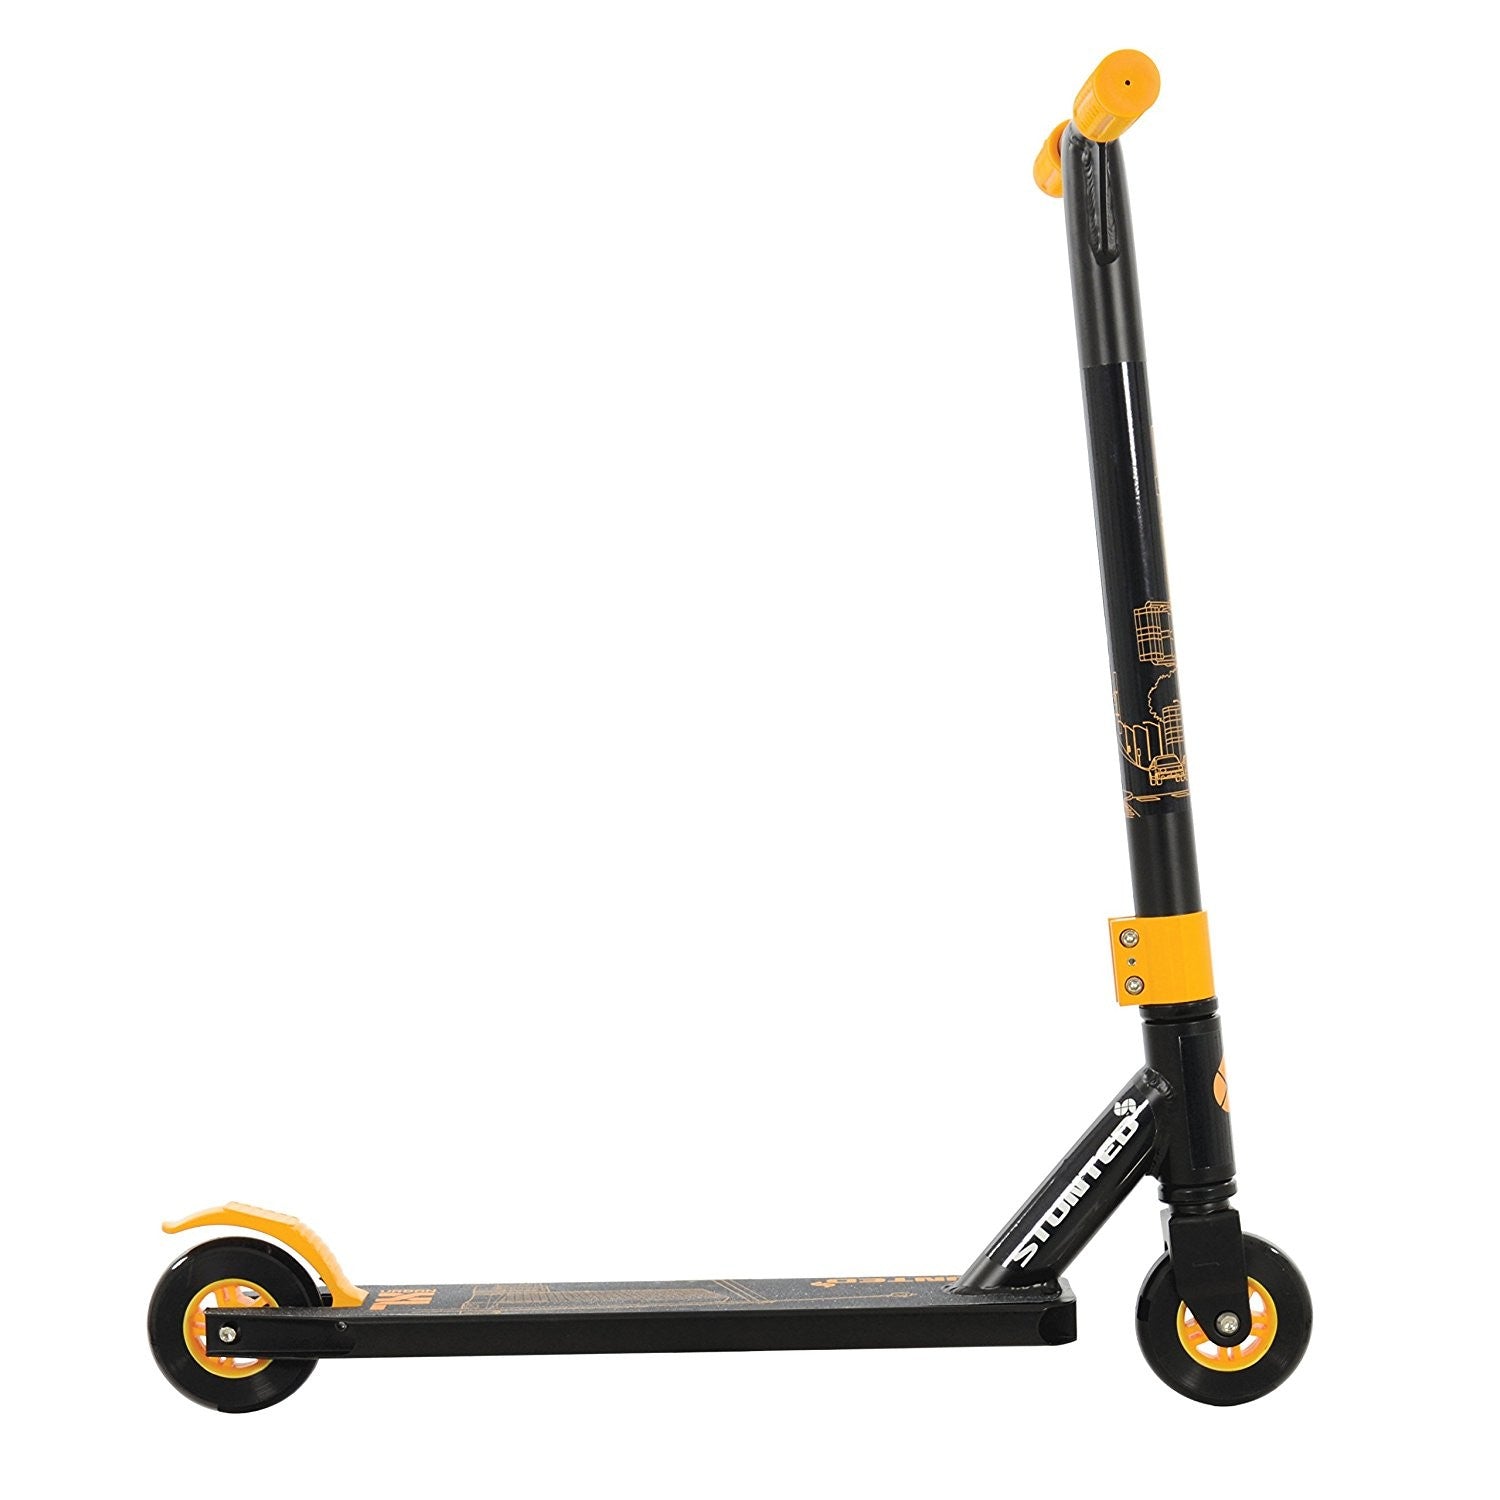 Stunted Urban XL Stunt Scooter Yellow - Bonnypack